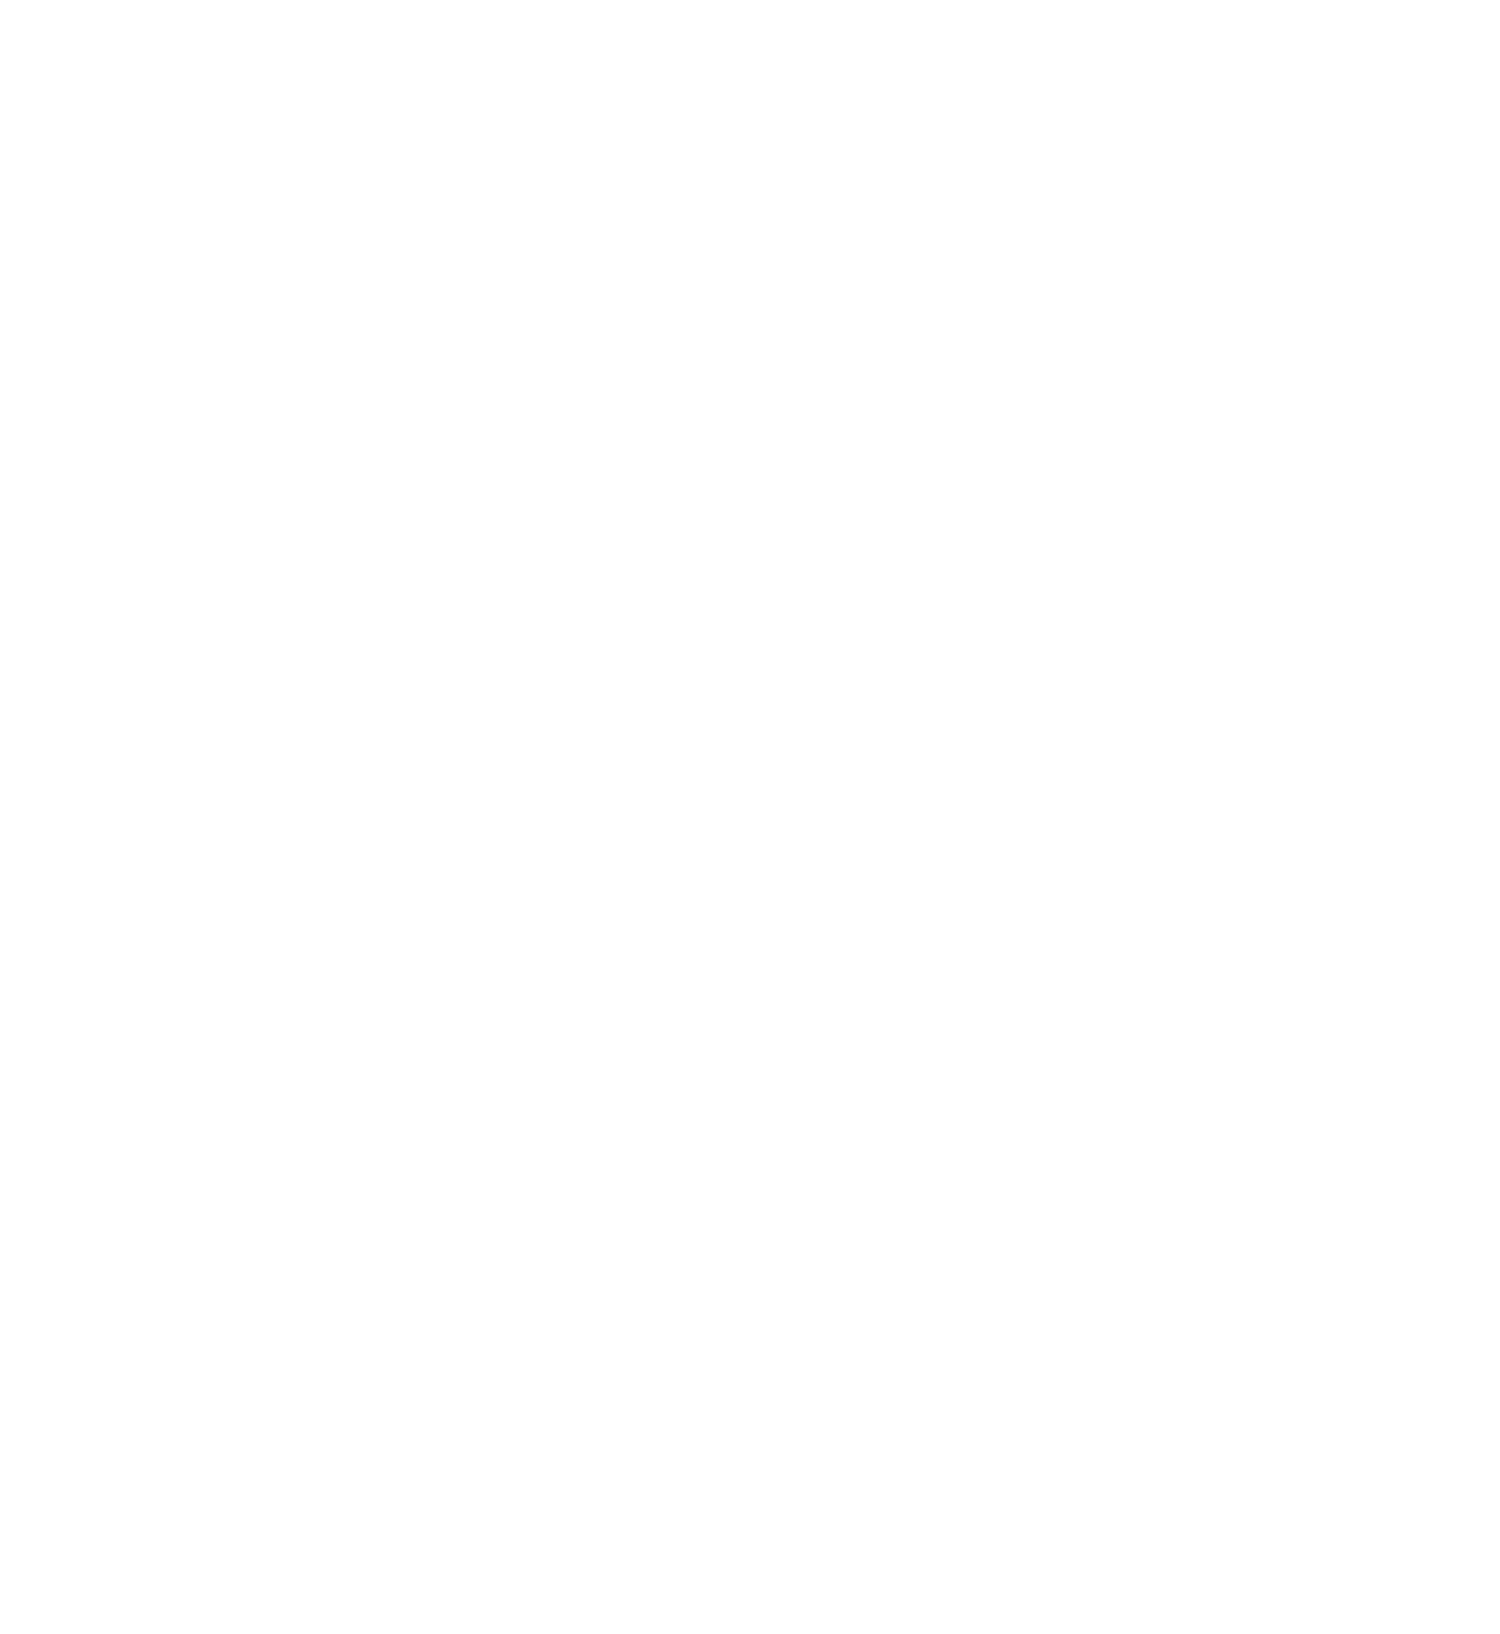 The Chordials